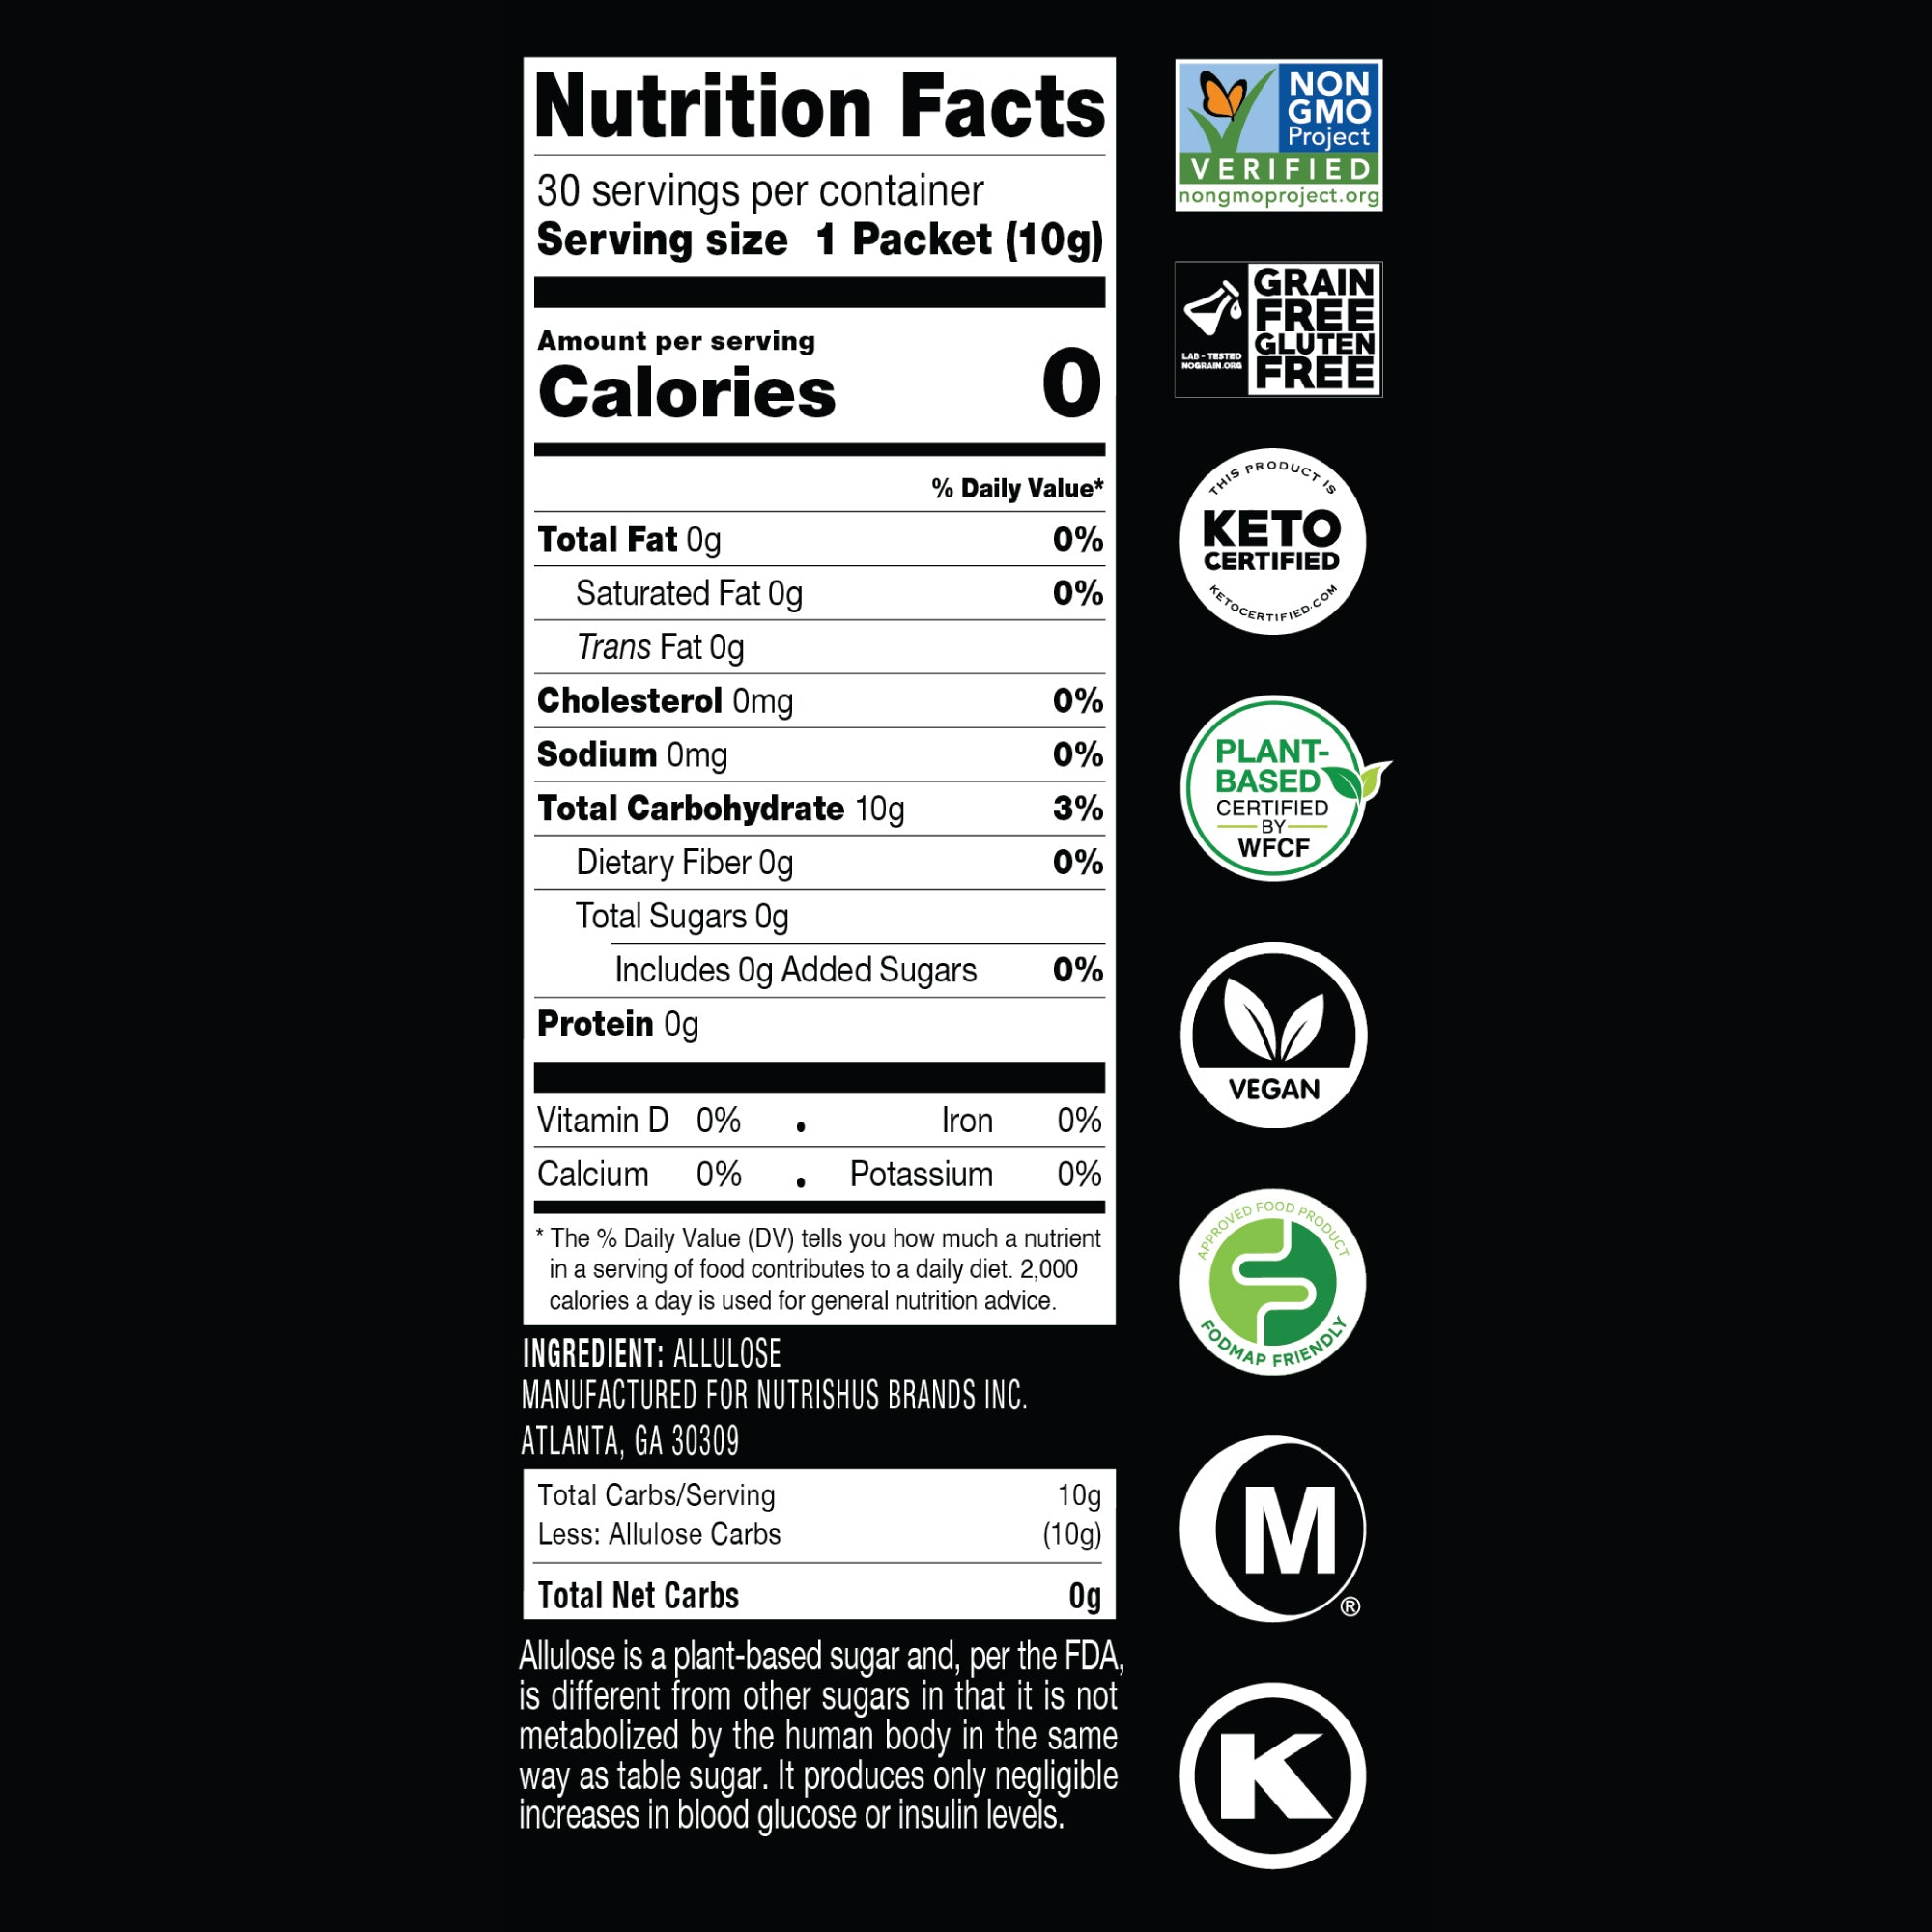 Nutrition facts panel for RxSugar Sticks 10g